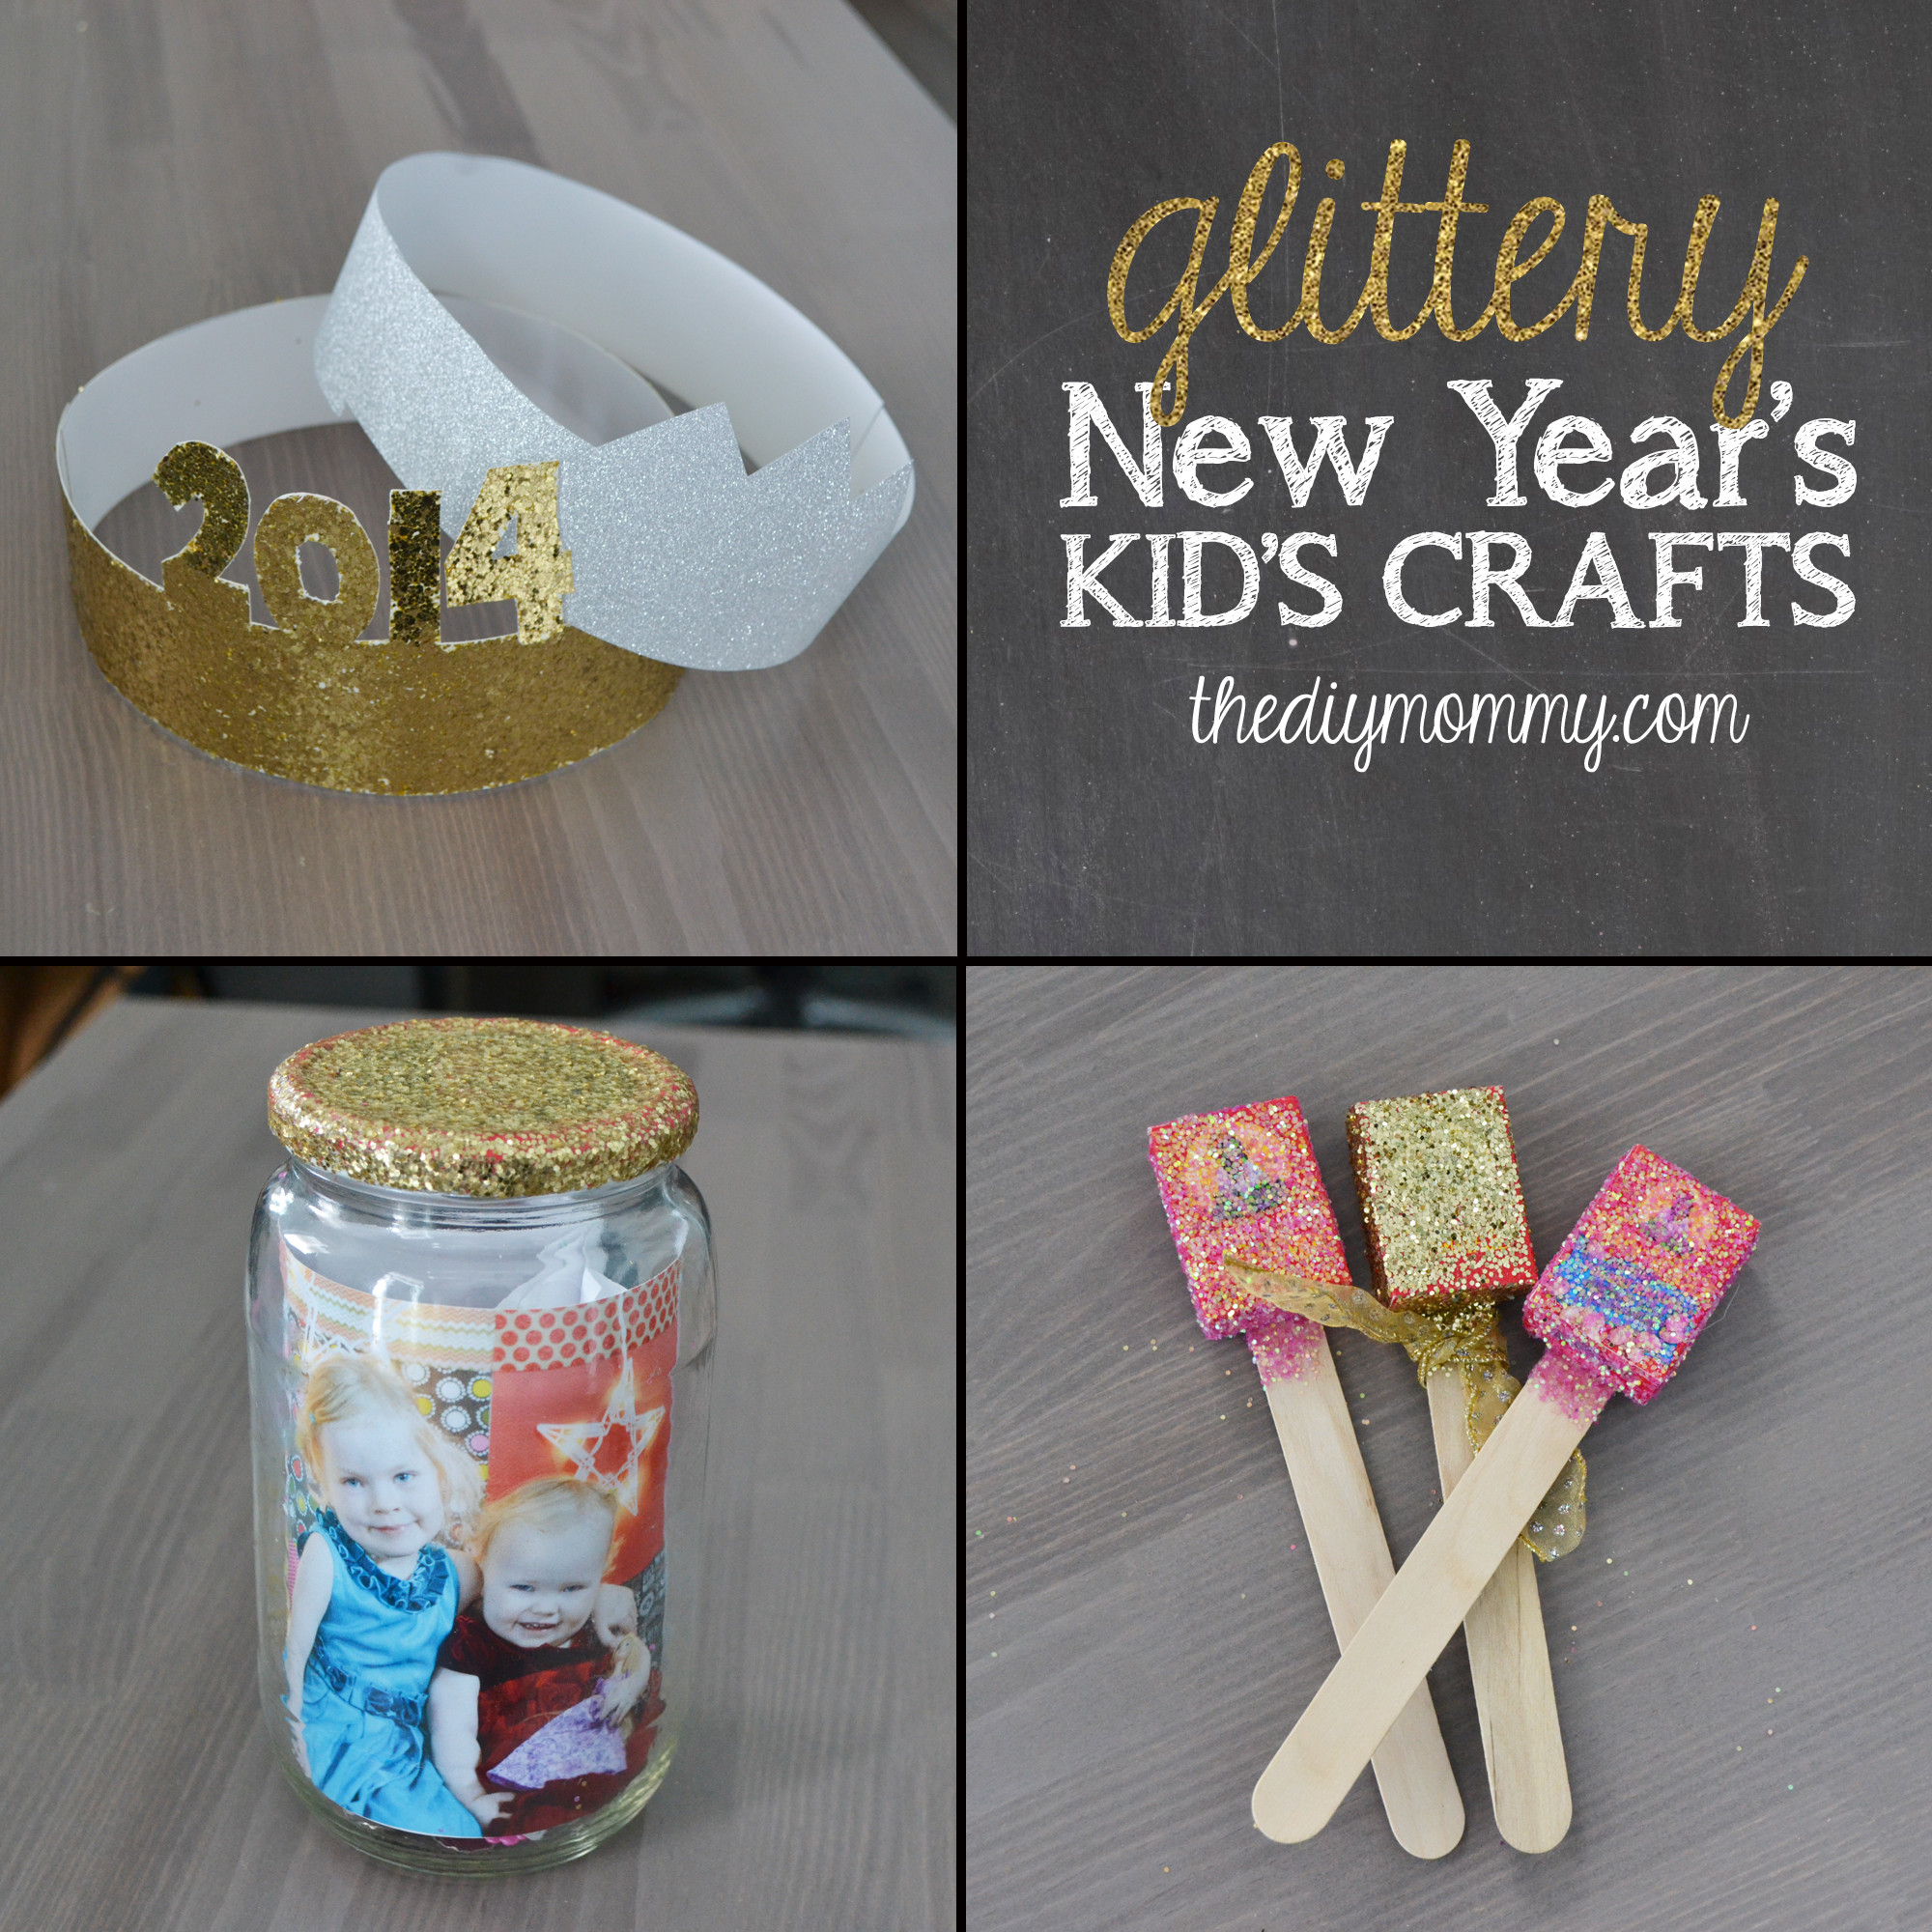 DIY Crafts Kids
 Make Glittery New Year’s Kid’s Crafts – The News